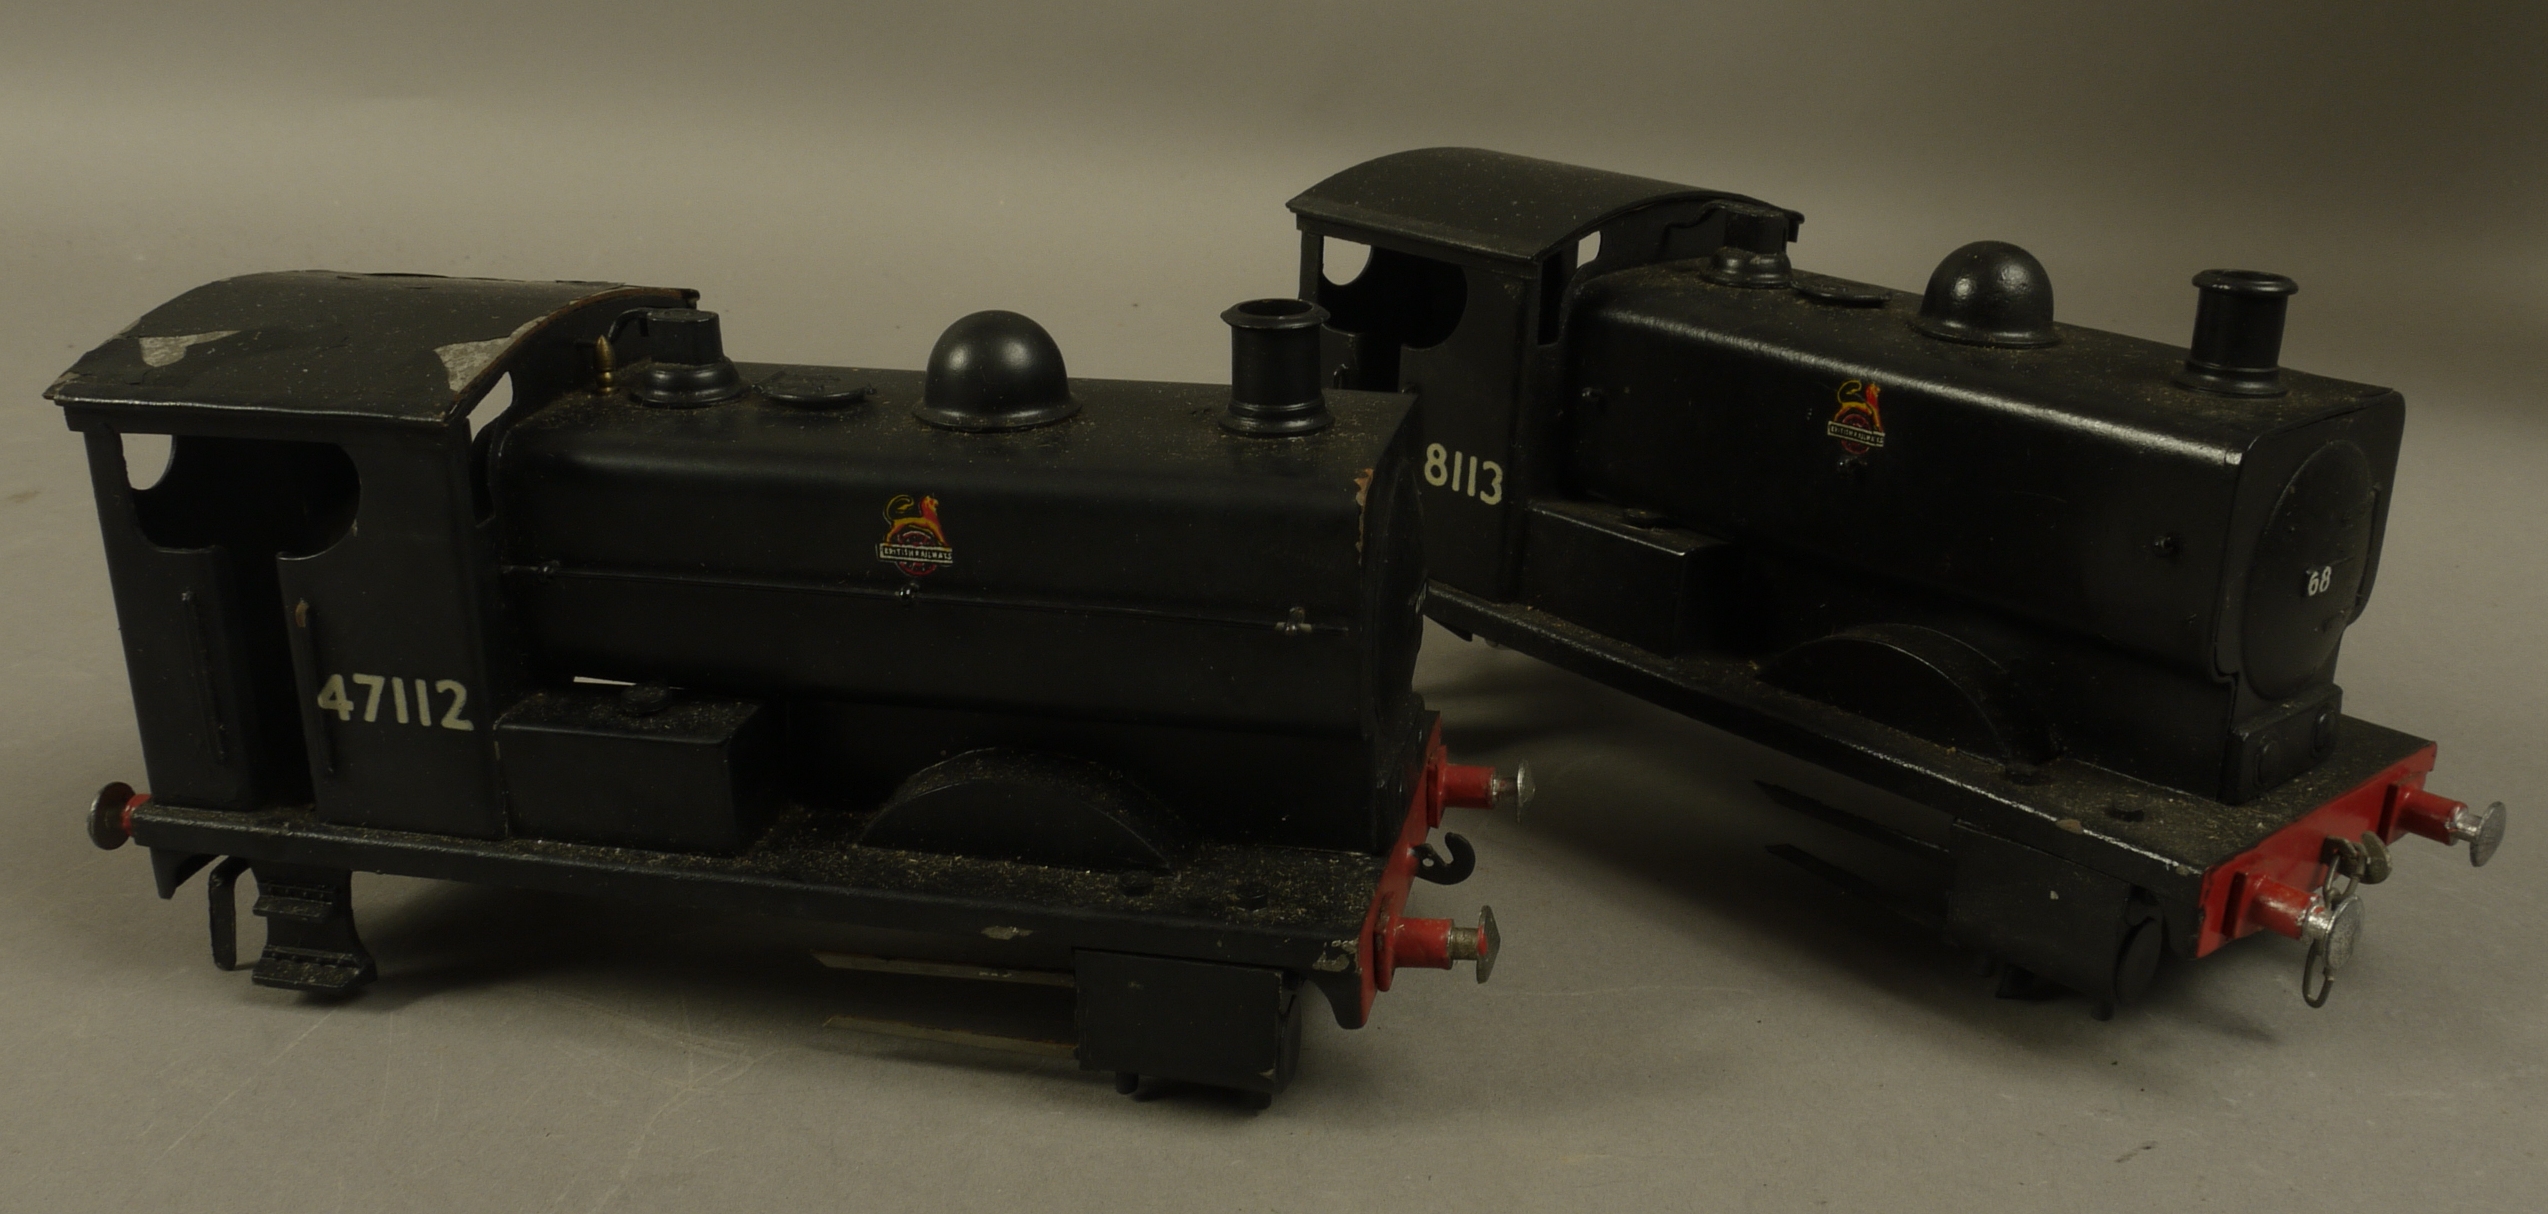 Tank Engine Body 0-4-0 Black, No 68113 (on cab),